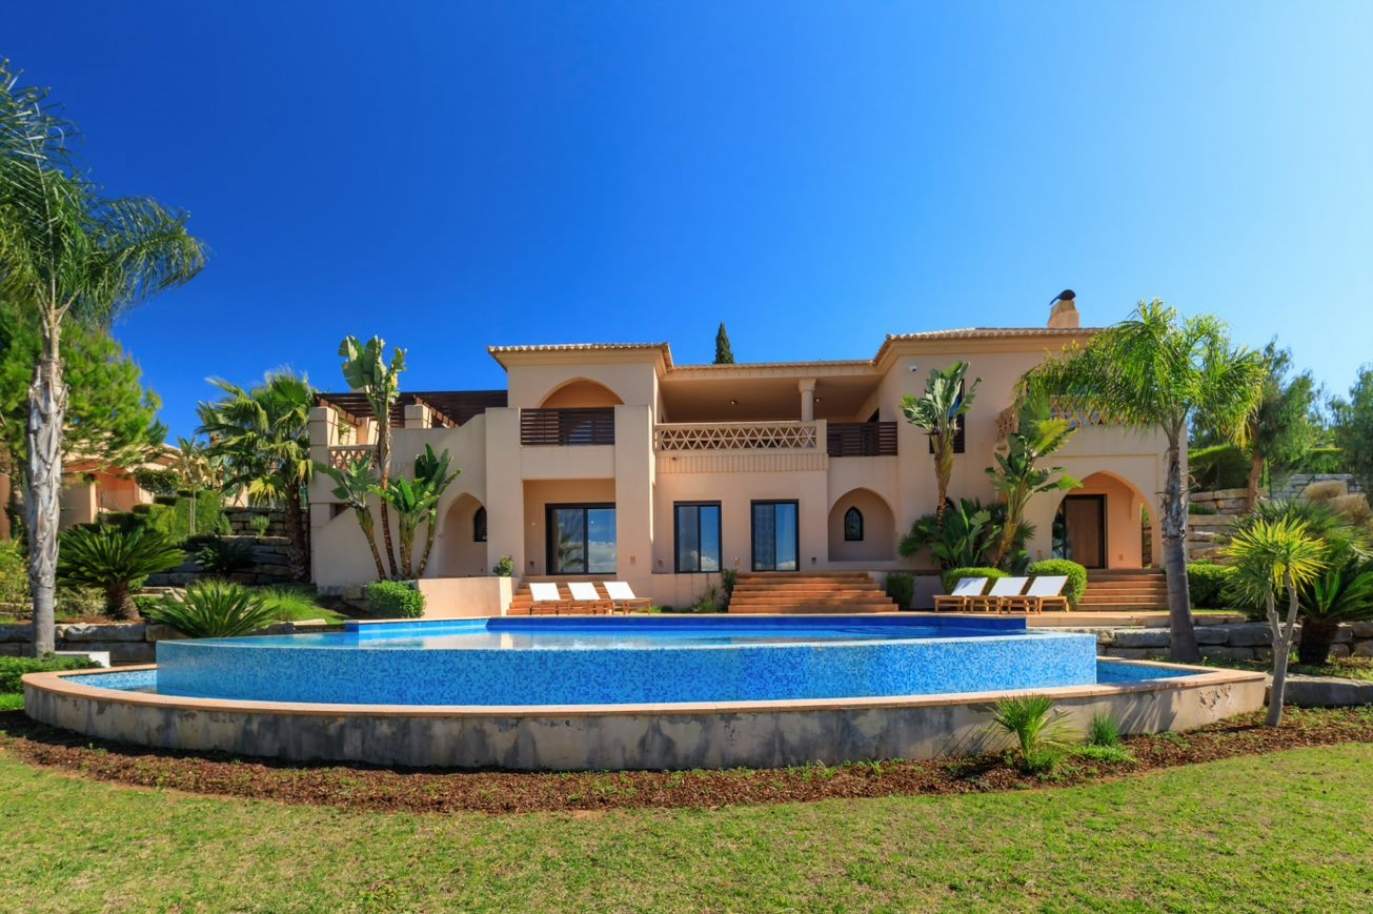 Villa for sale, with terrace, Silves, Algarve, Portugal_155428